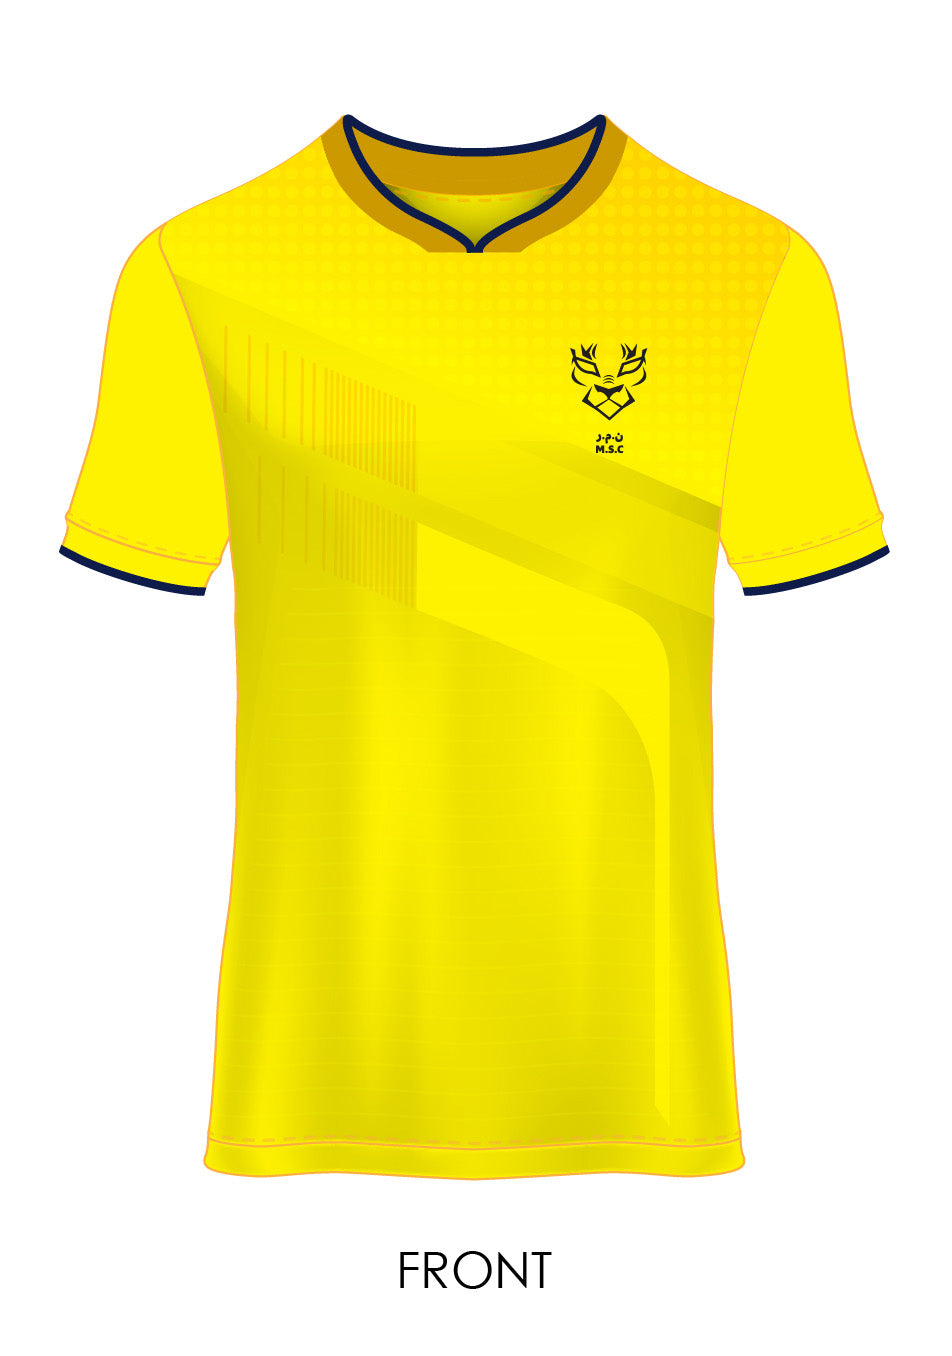 Al Maarif Pe Jersey T-shirt Yellow (All Grades)